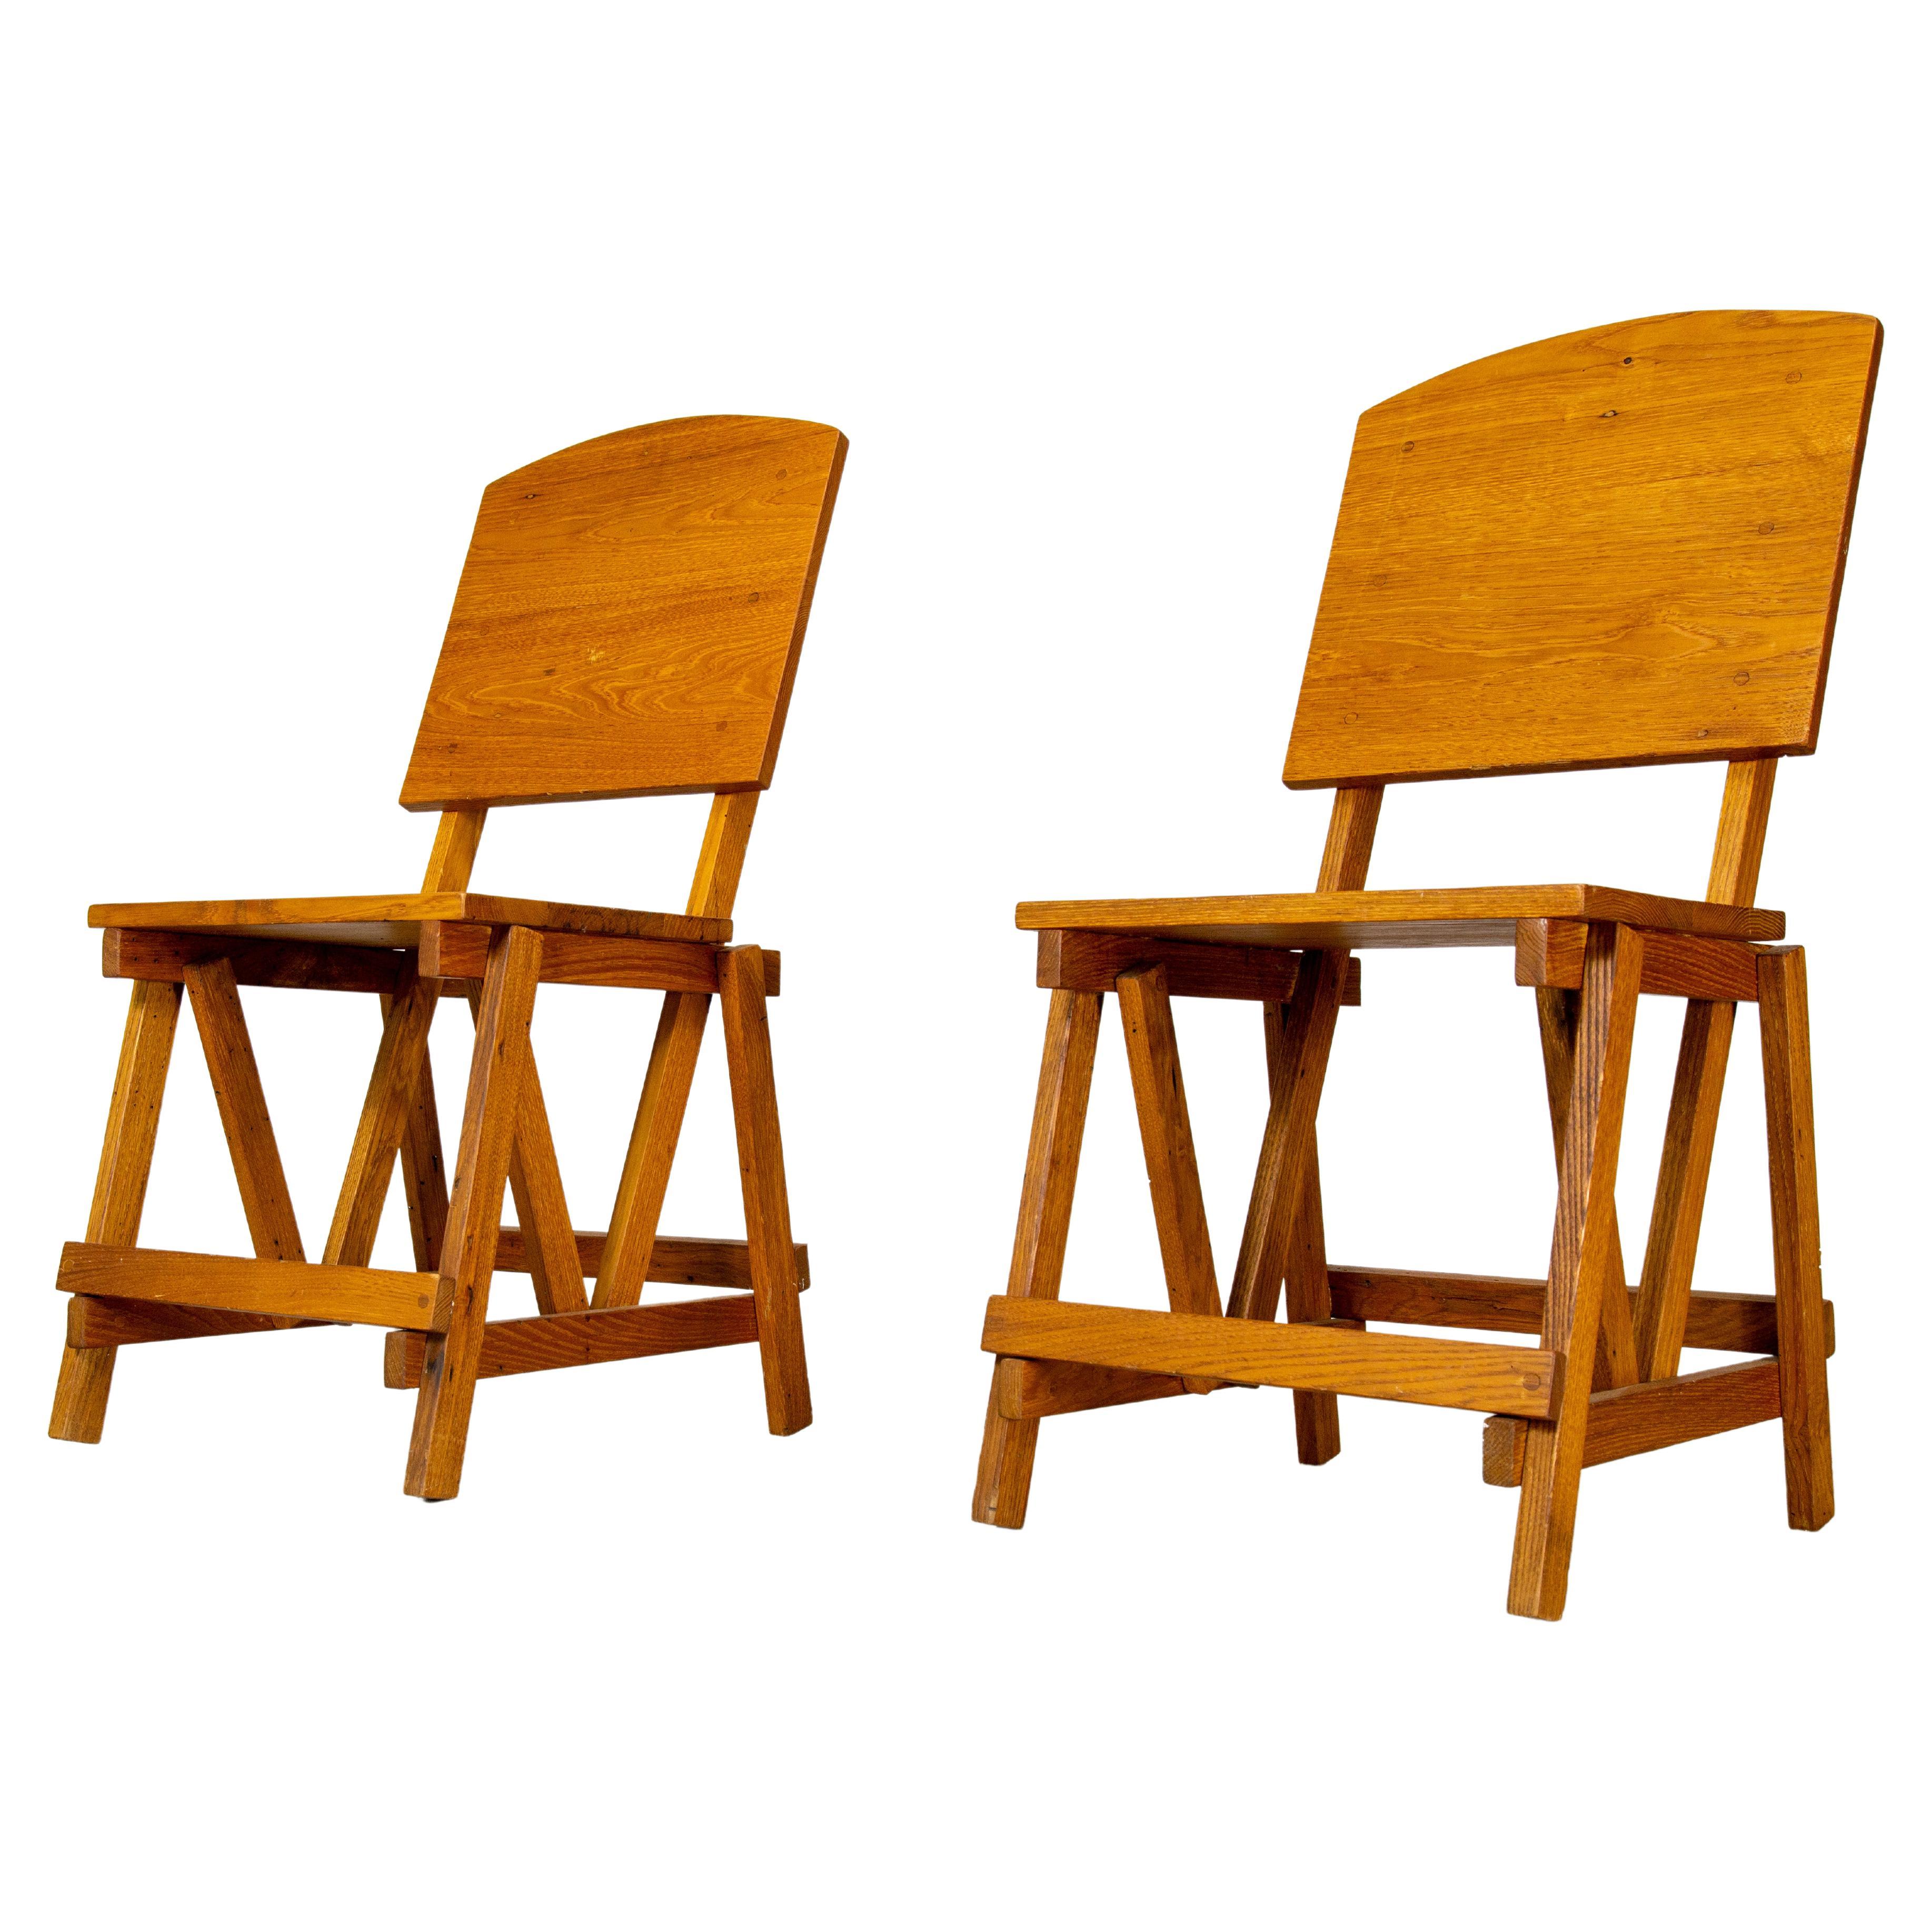 Pair of Architectural Constructivist Oak Chairs After Enzo Mari or Jean Touret